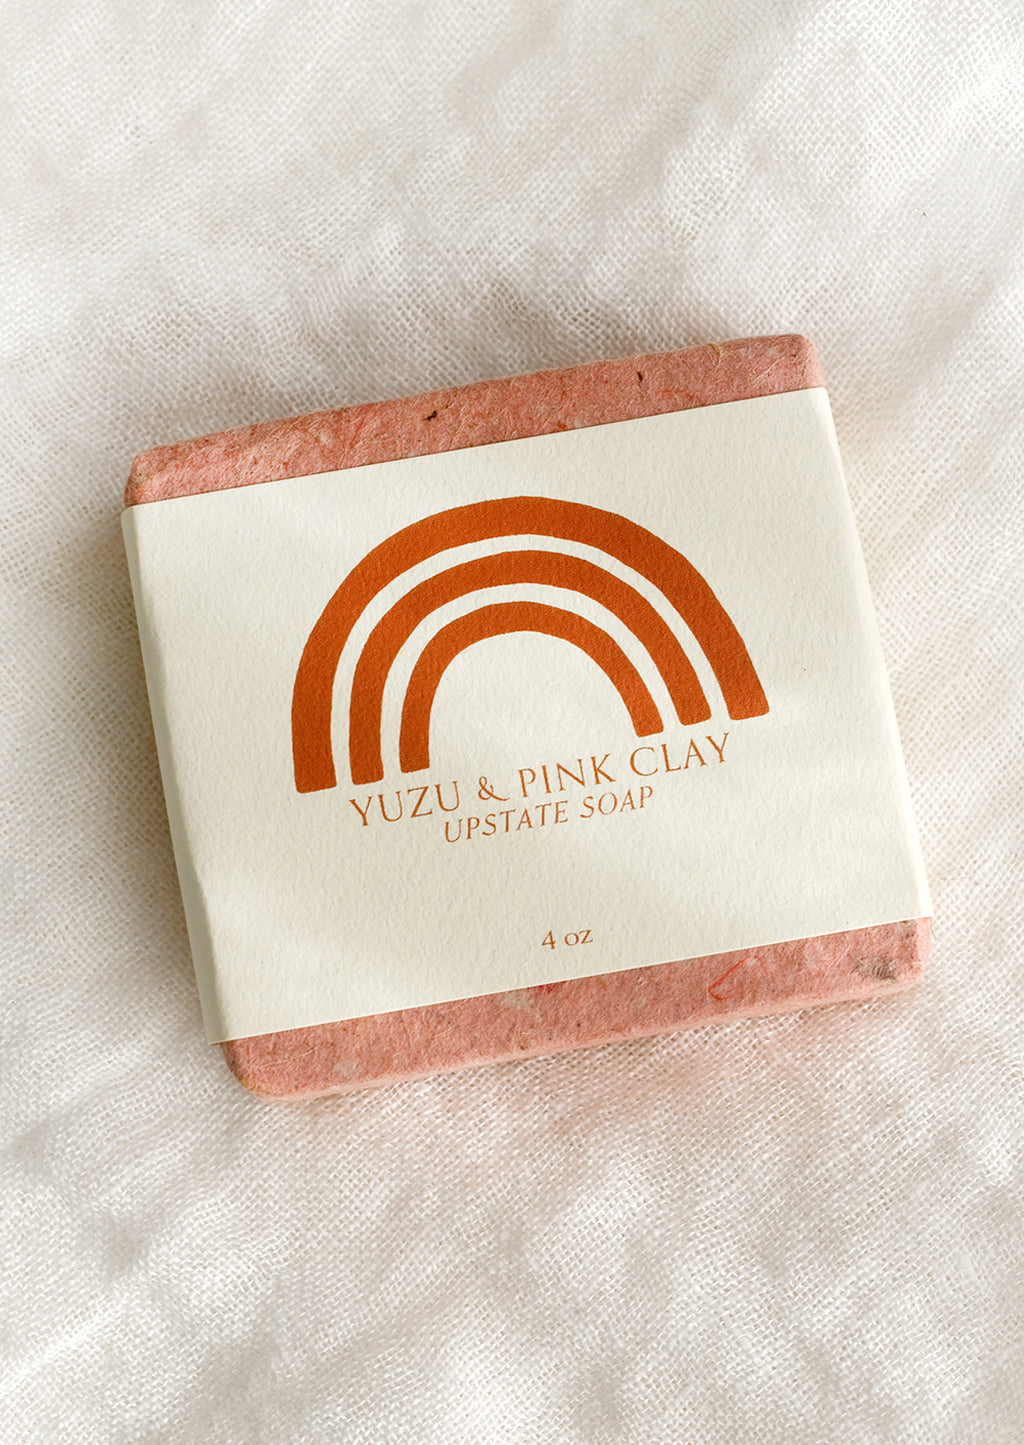 Yuzu & Pink Clay: A bar of yuzu and pink clay soap.